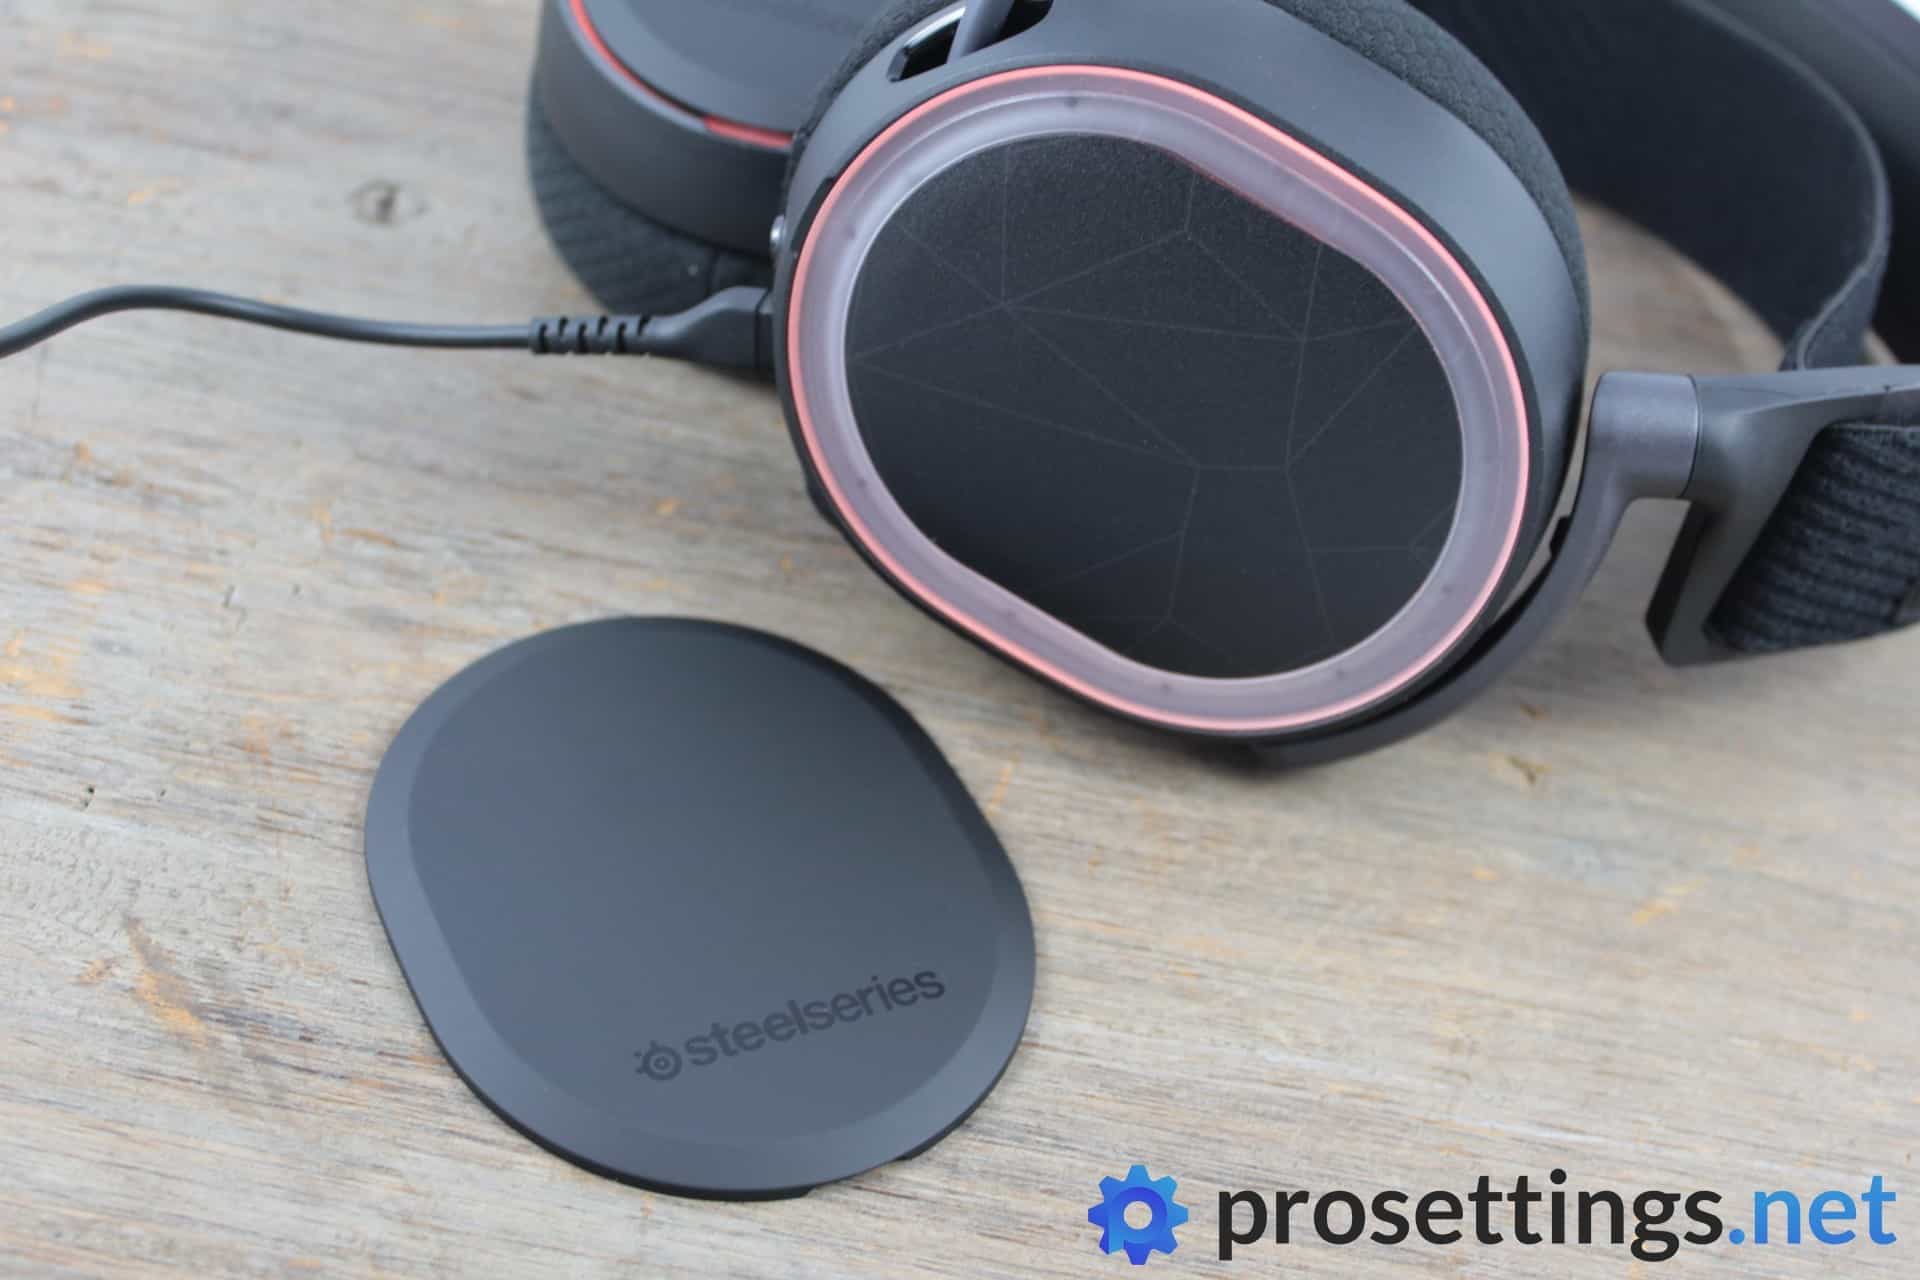 SteelSeries Arctis Pro Headset Review